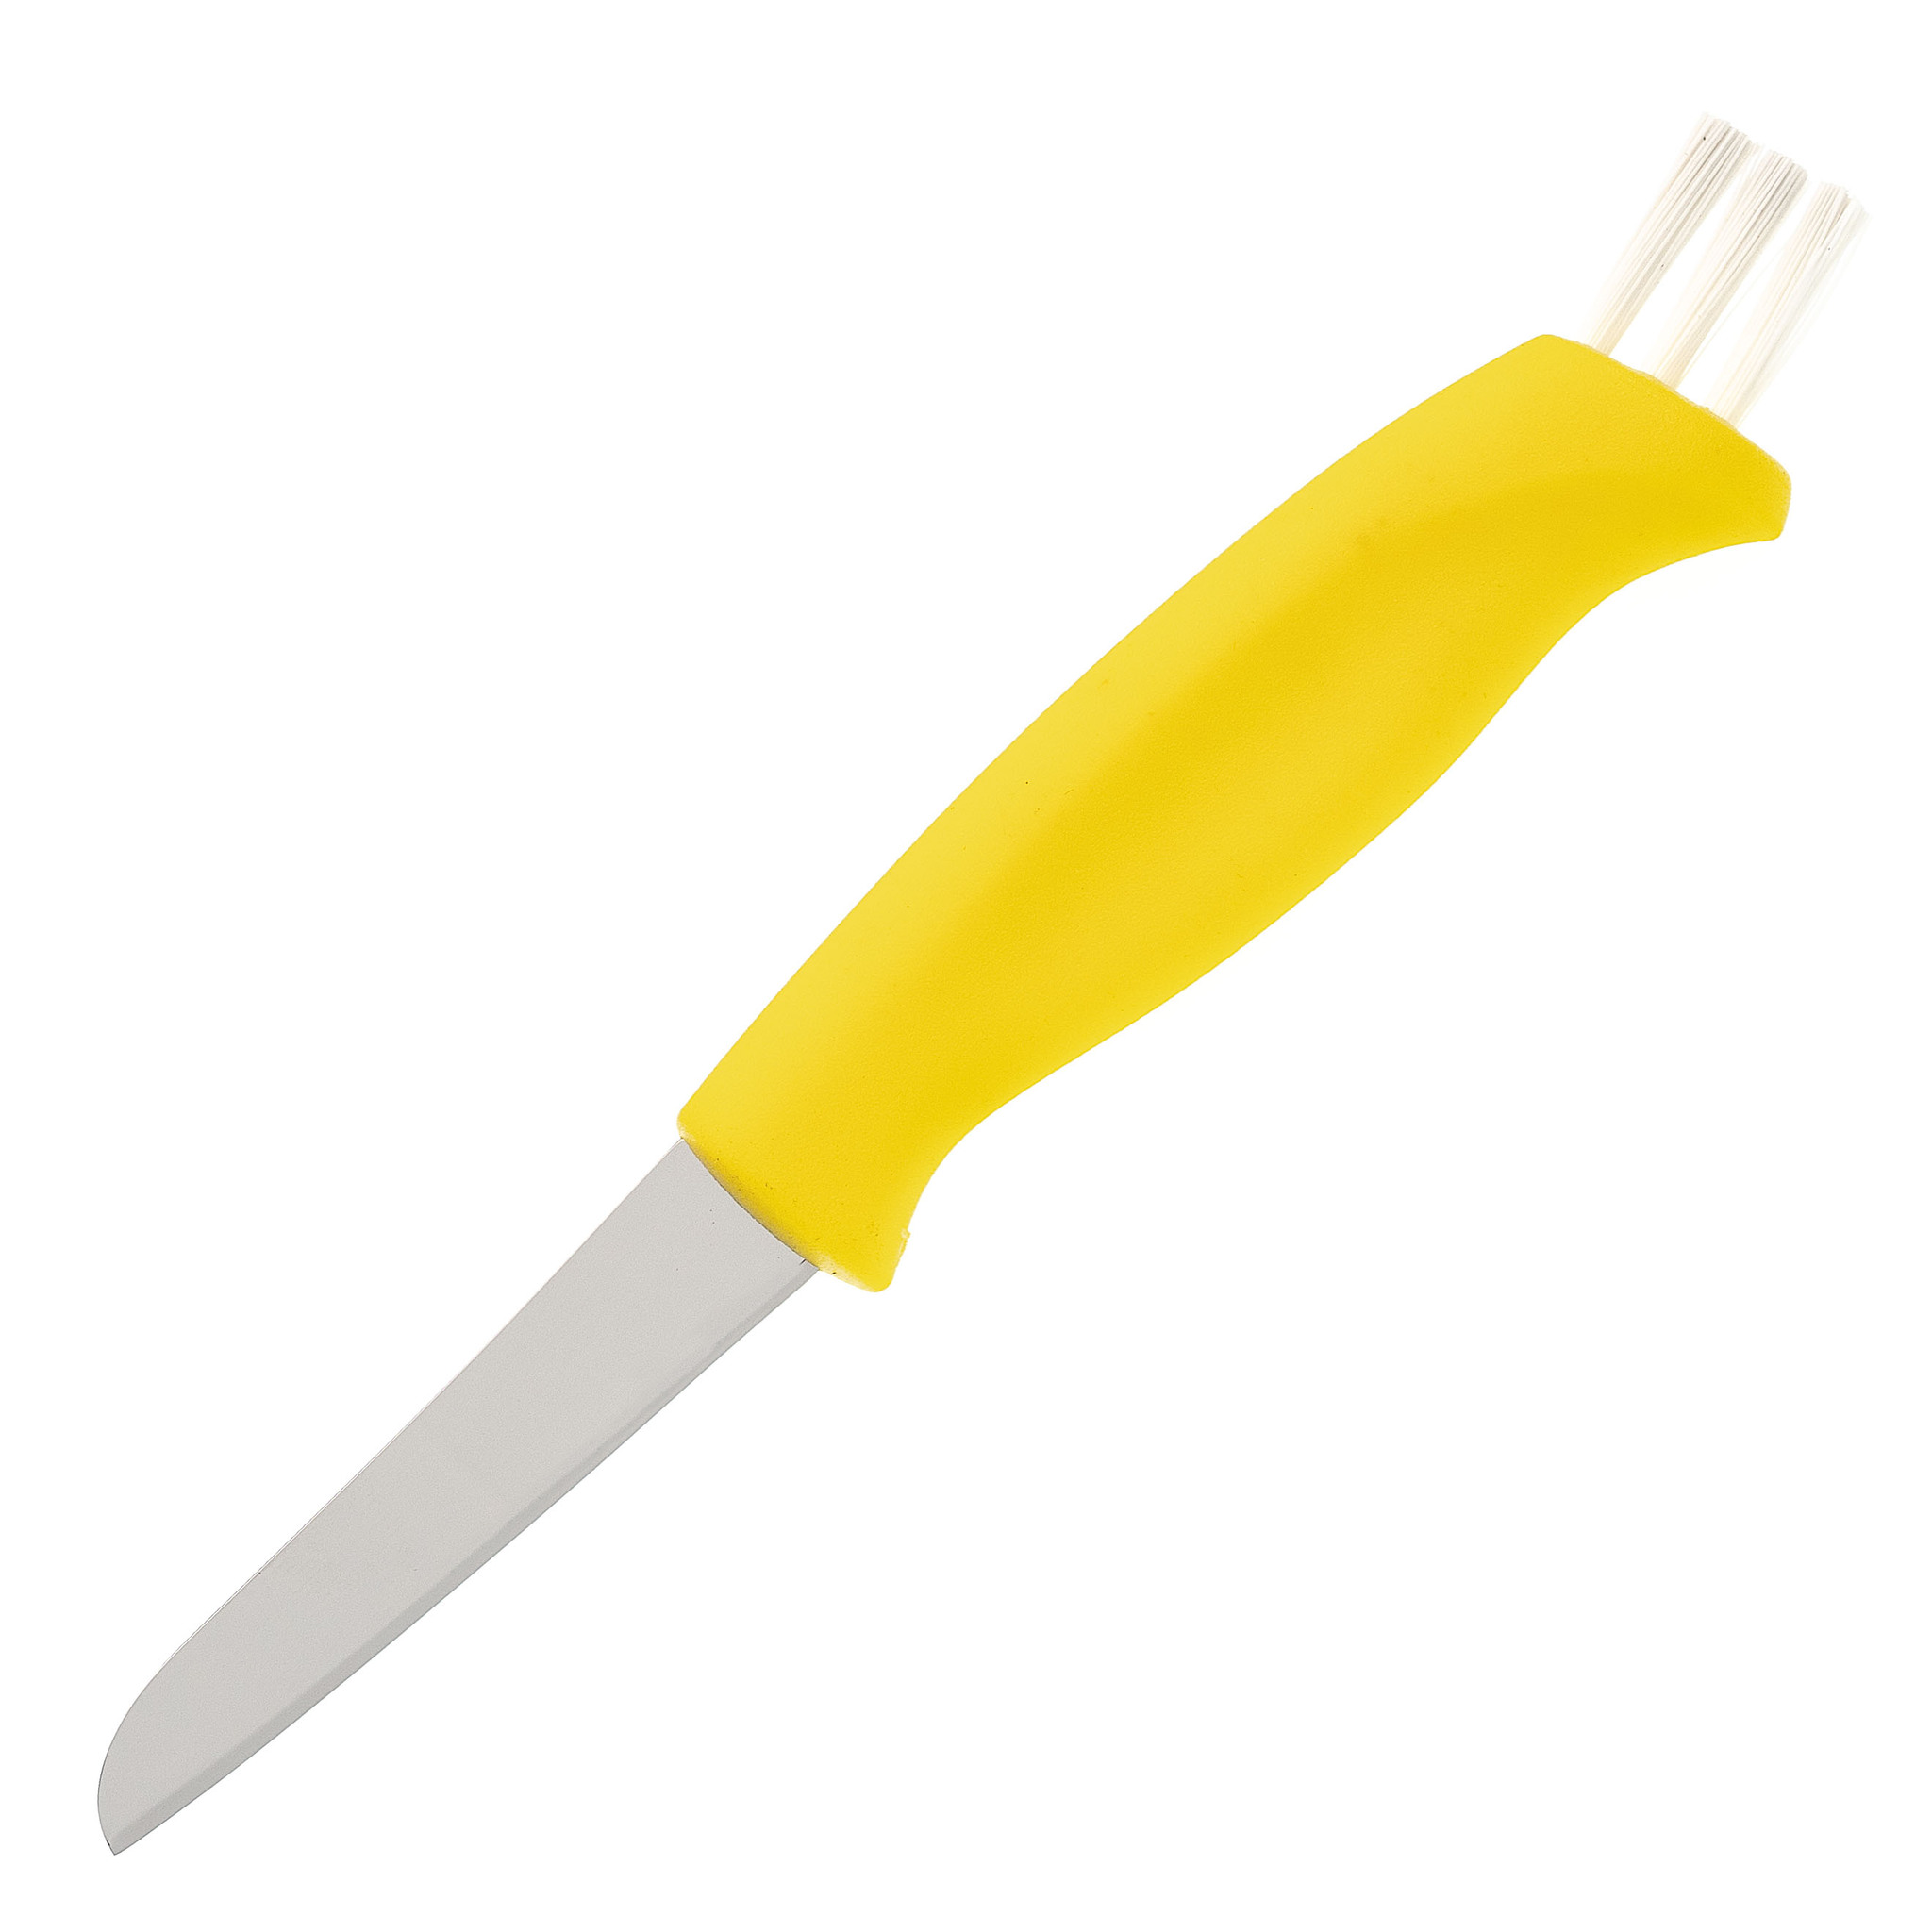 Нож грибной Marttiini Mushroom knive, сталь X46Cr13, рукоять пластик